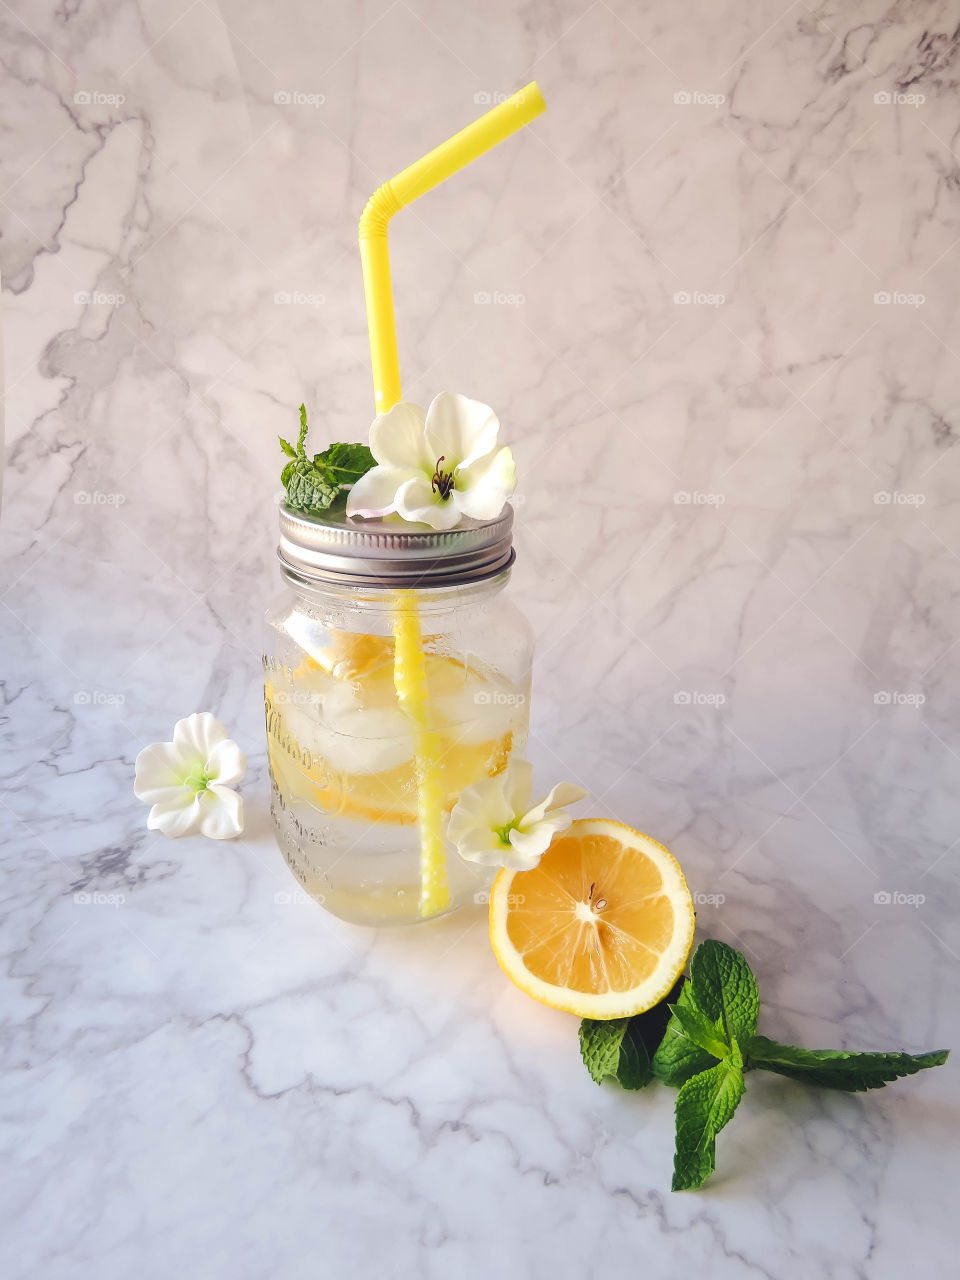 jar with a refreshing lemonade